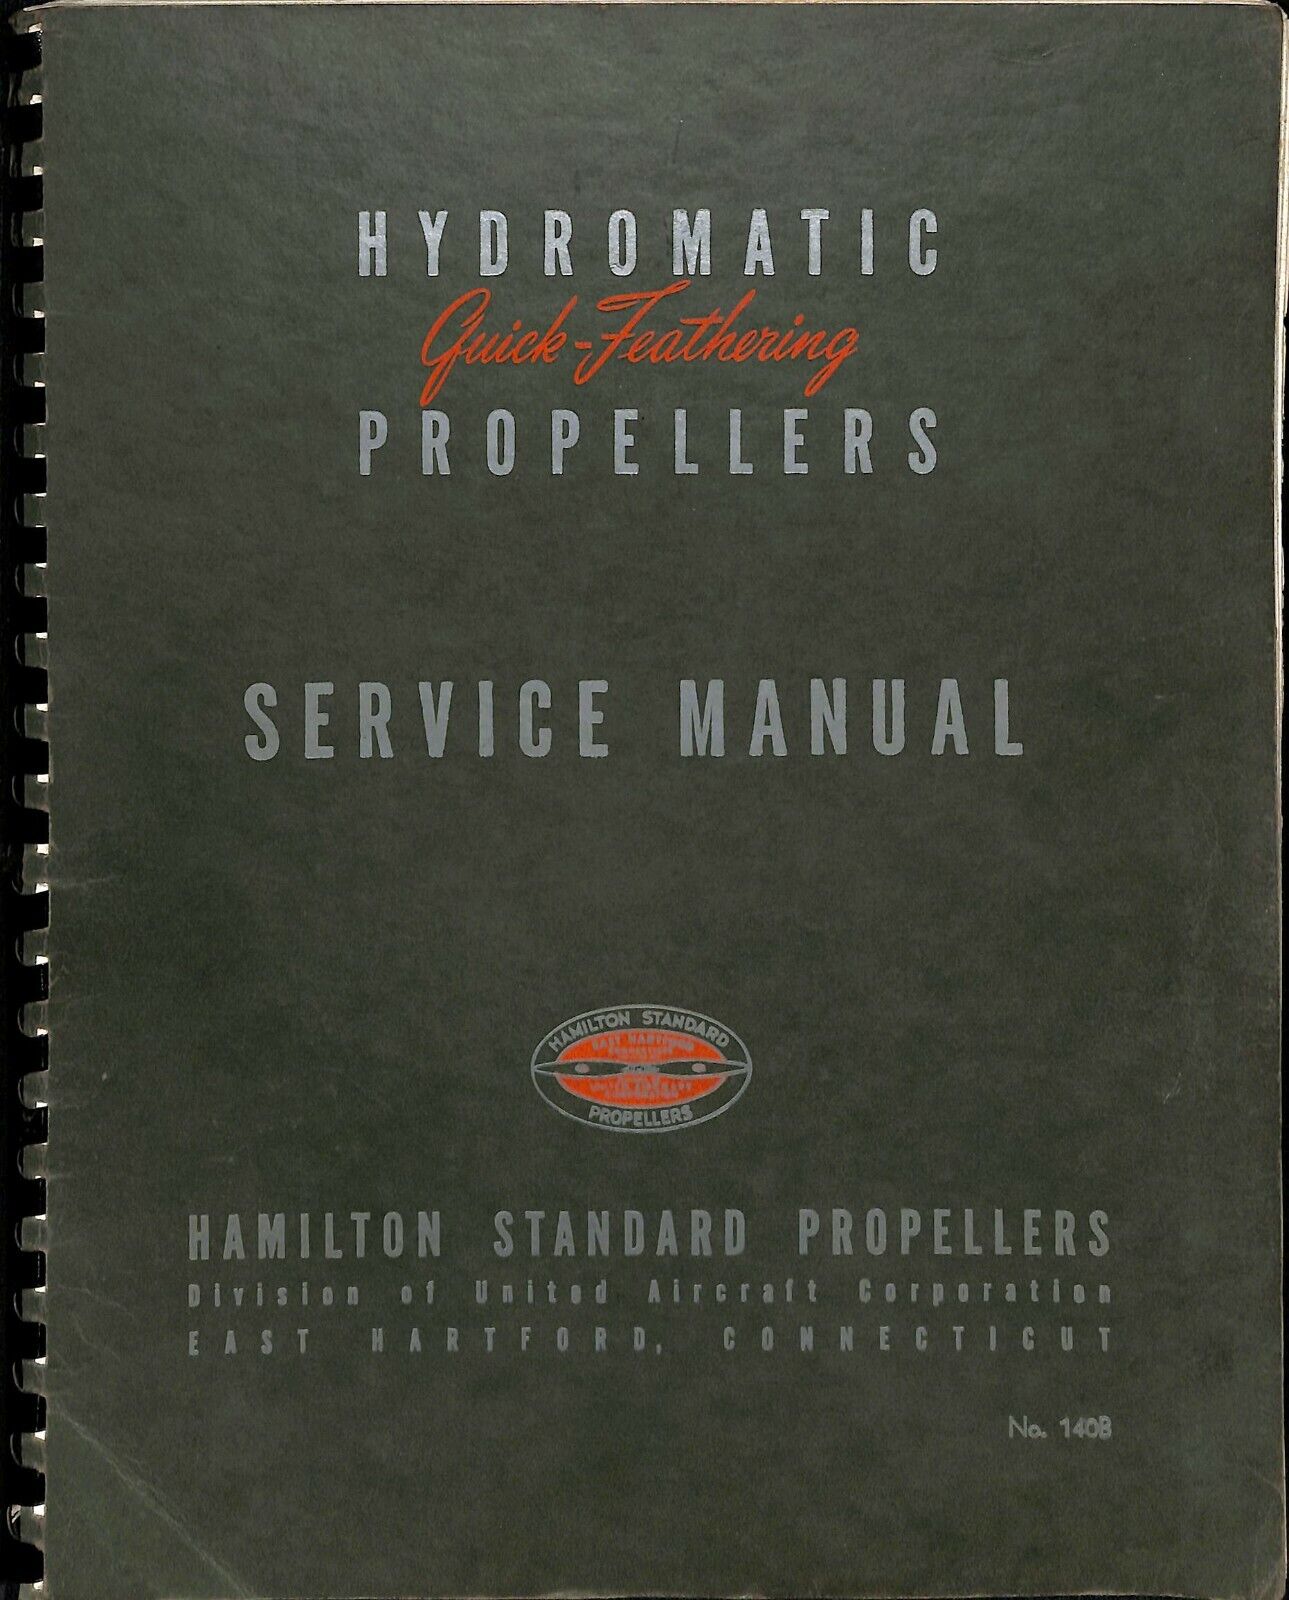 Hamilton Standard Propellers Service Manual 140B Hydromatic Feathering 1944